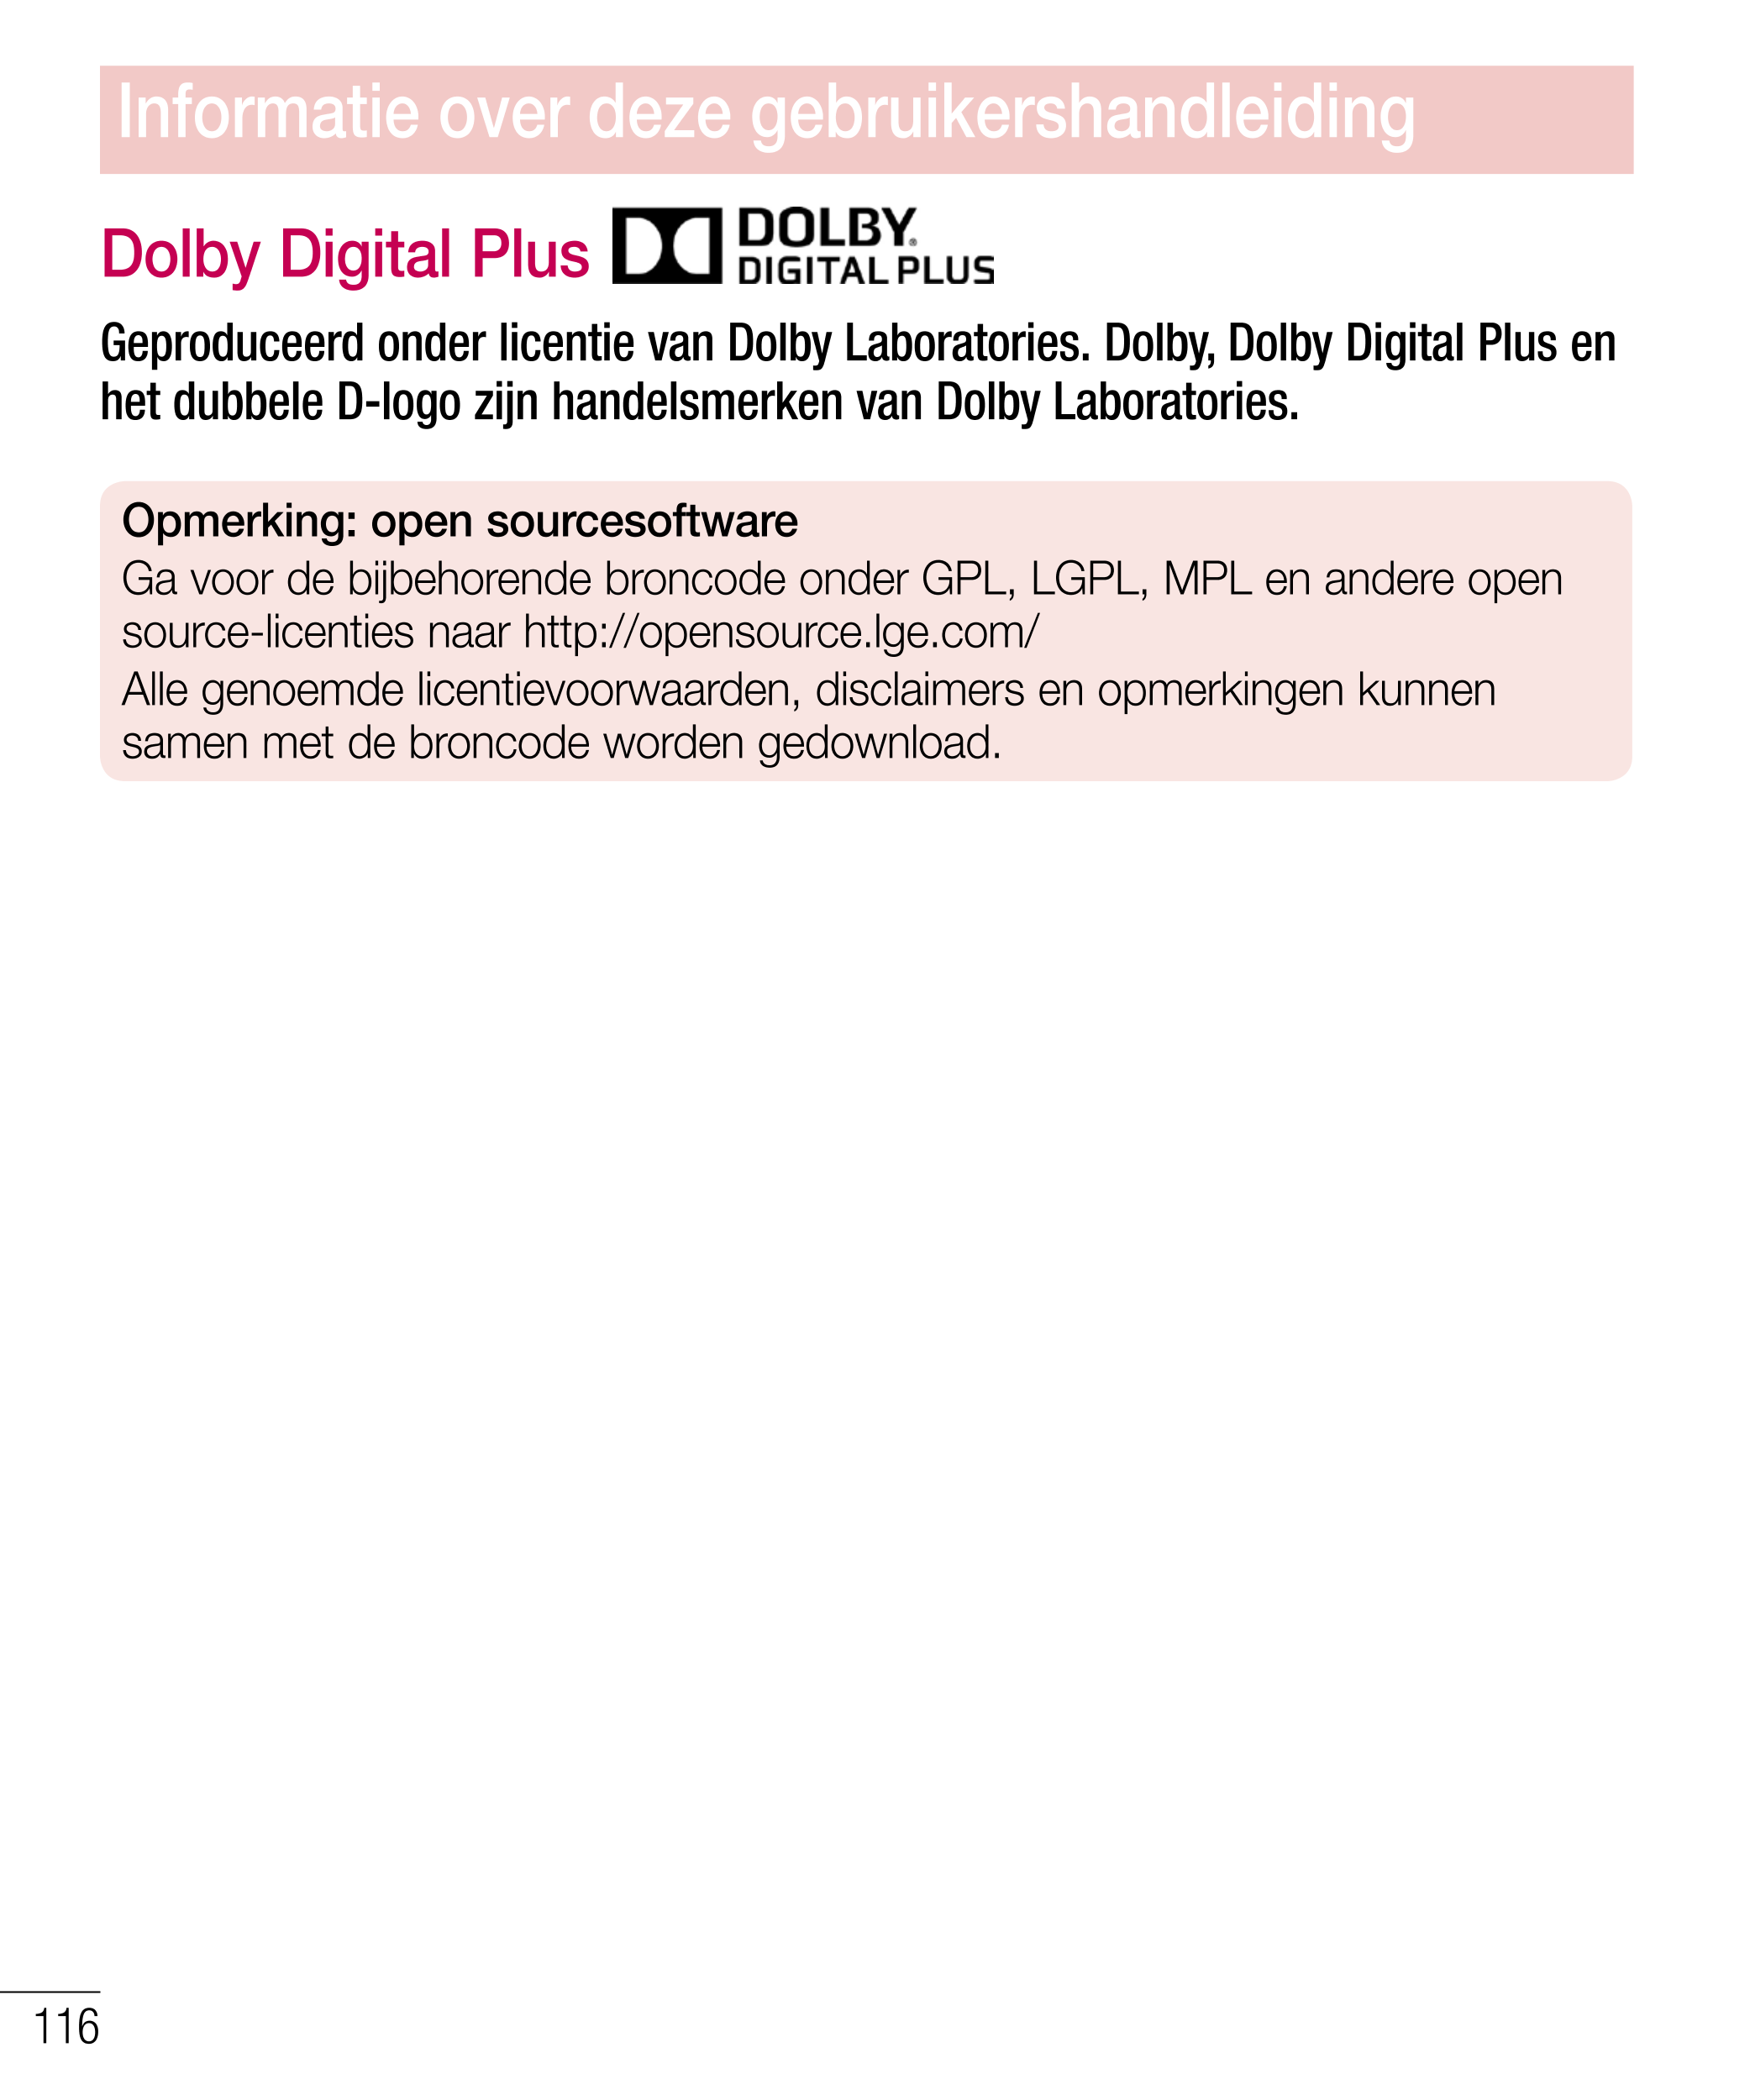 Informatie over deze gebruikershandleiding
Dolby Digital Plus 
Geproduceerd onder licentie van Dolby Laboratories. Dolby, Dolby 